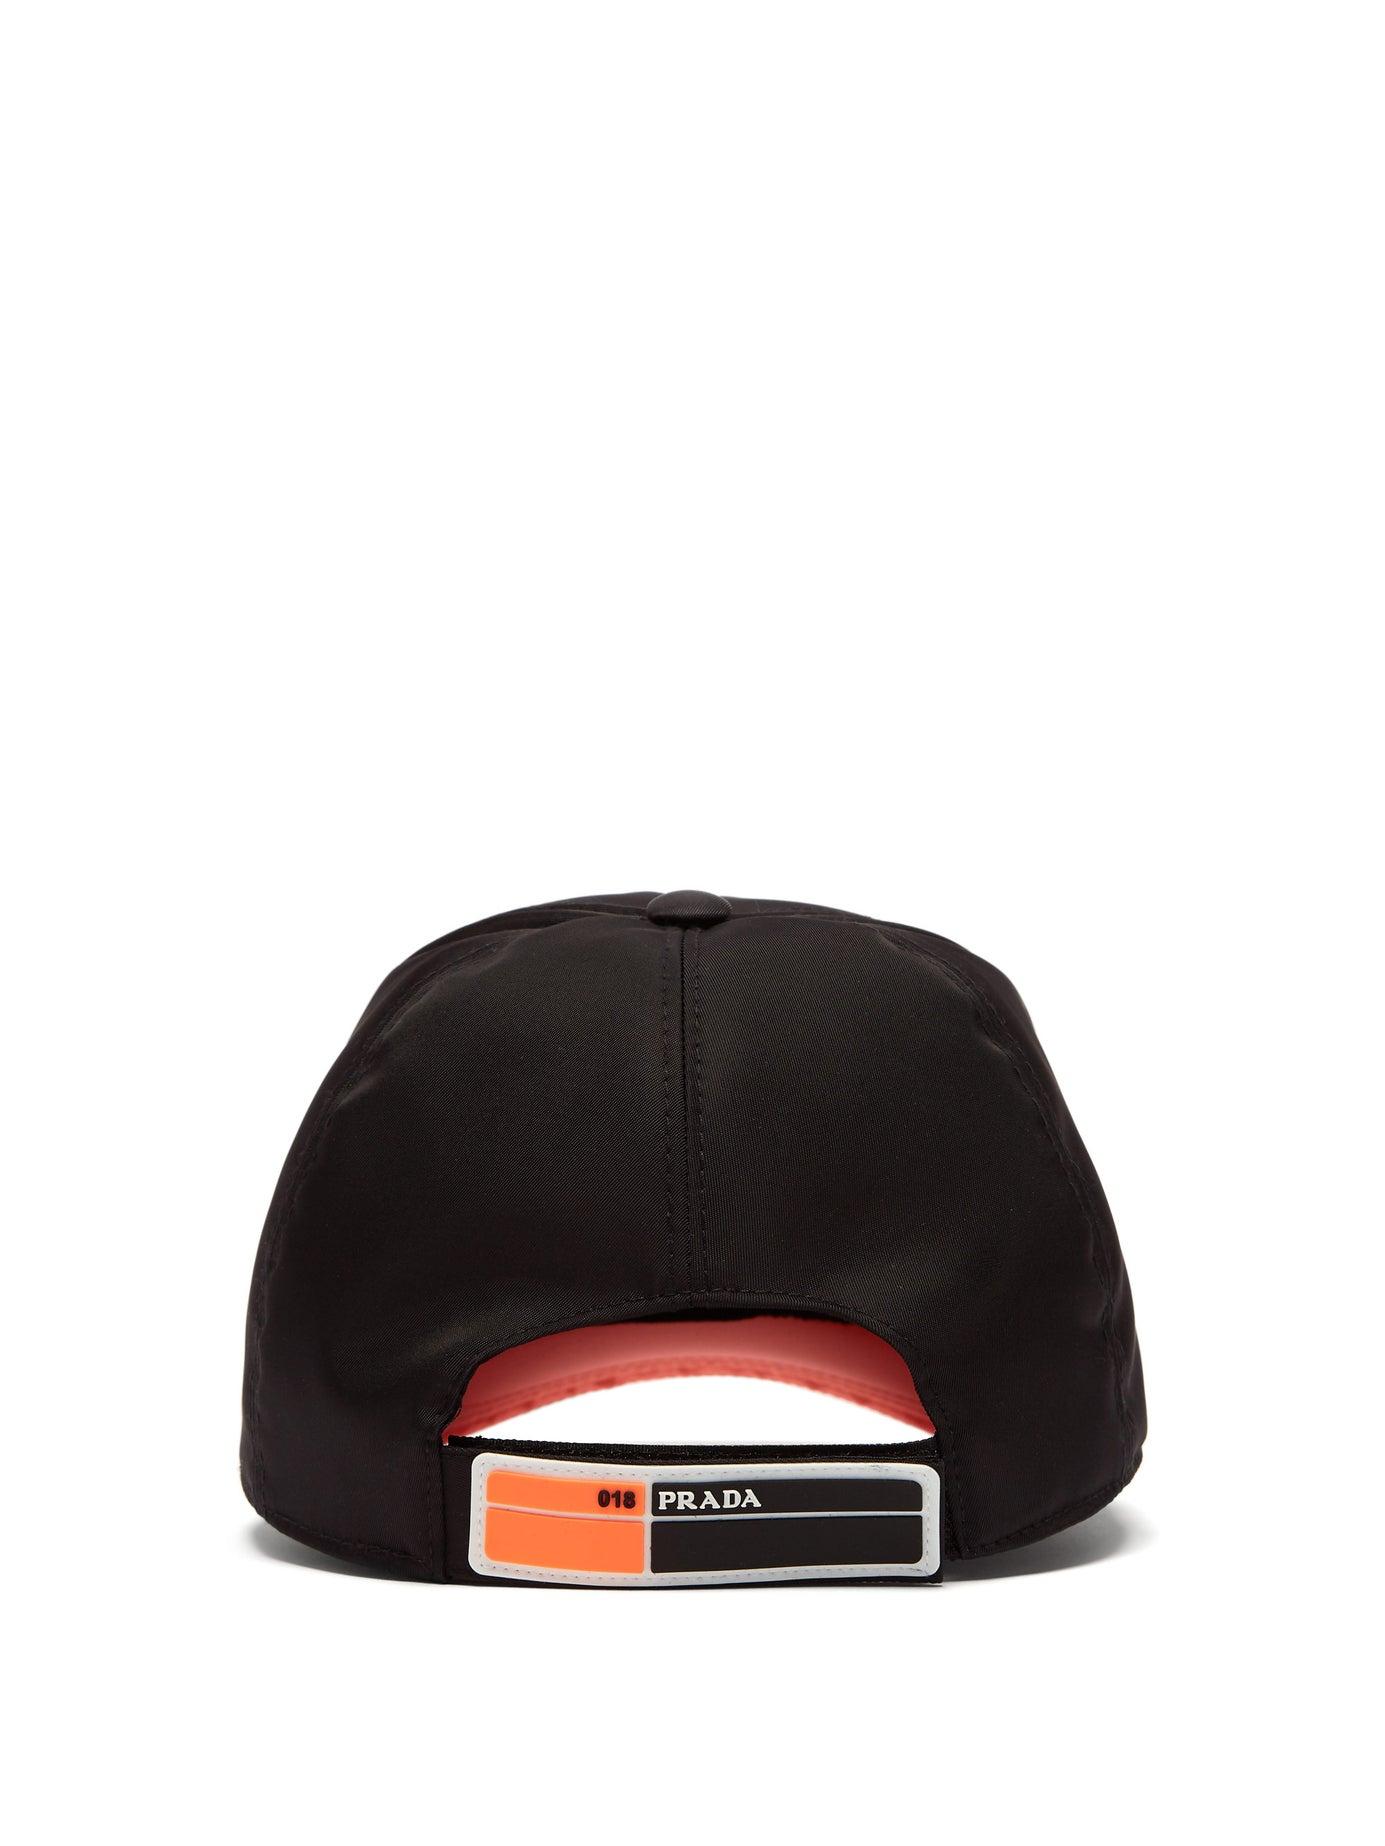 NEW Vexilar Stocking Hat Cap Black W/Logo CAP005